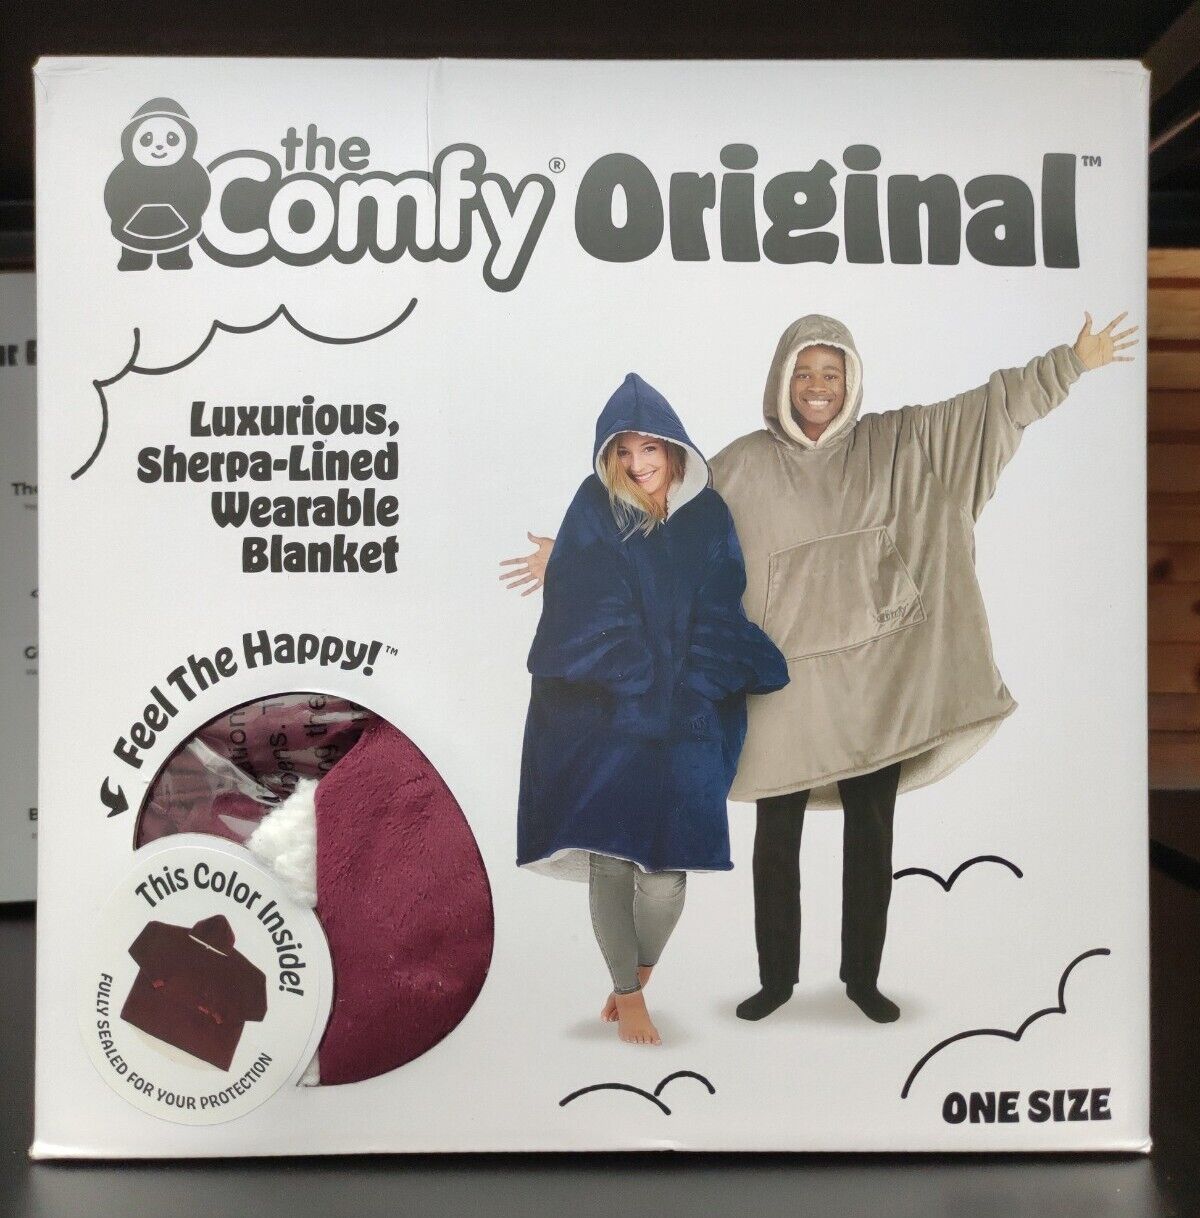 The Comfy Original Wearable Blanket in Burgundy